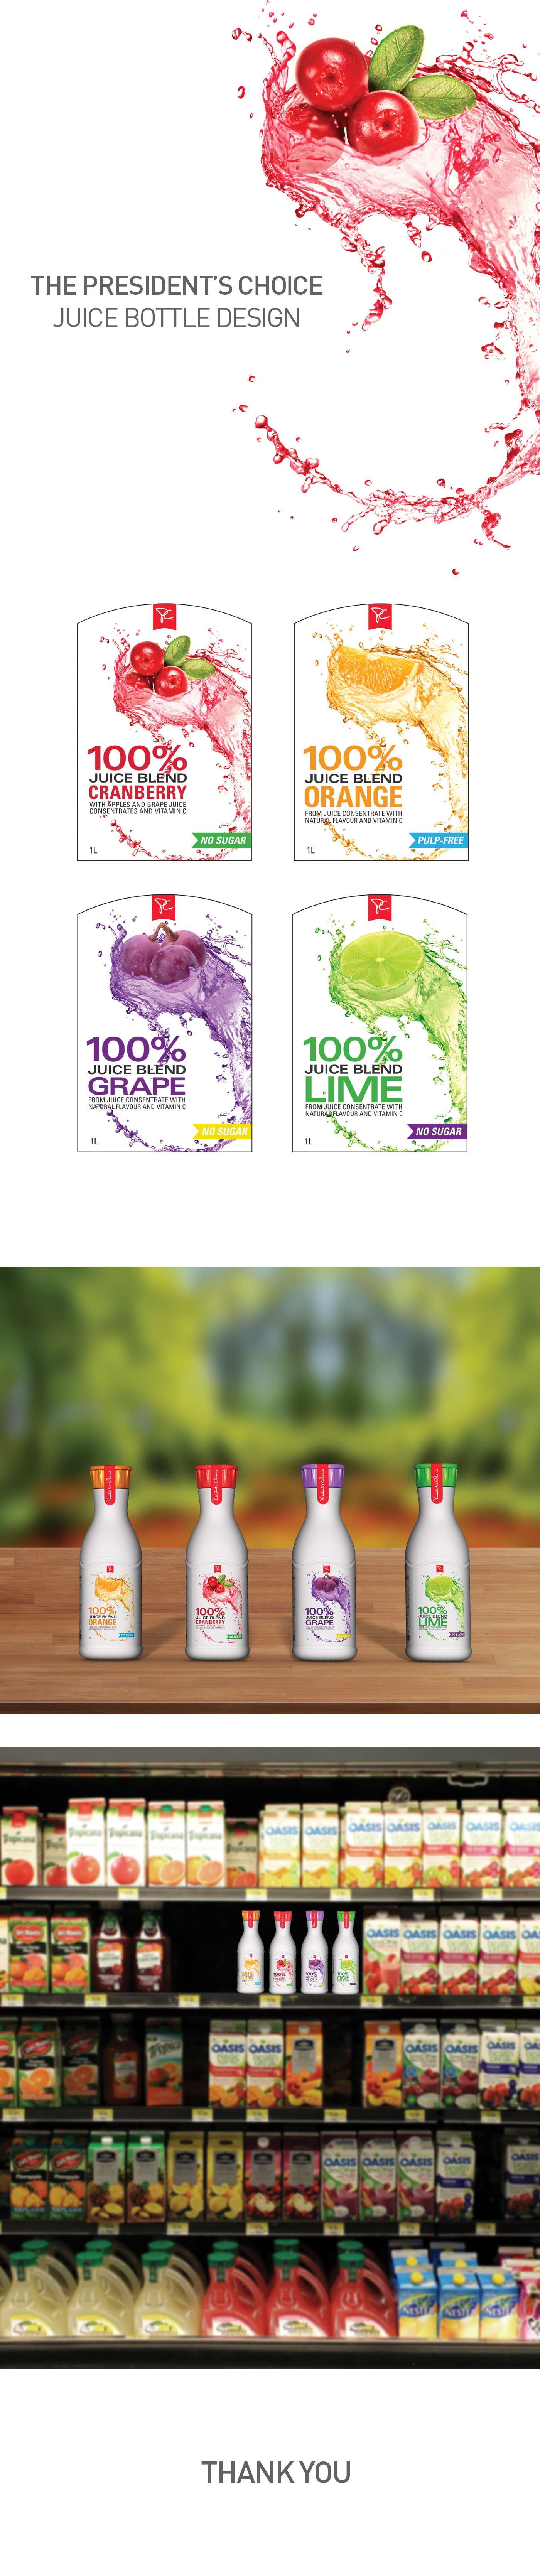 Juice Bottle Design THE PRESIDENT’S CHOICE seneca college Ibrahim Al-Watban